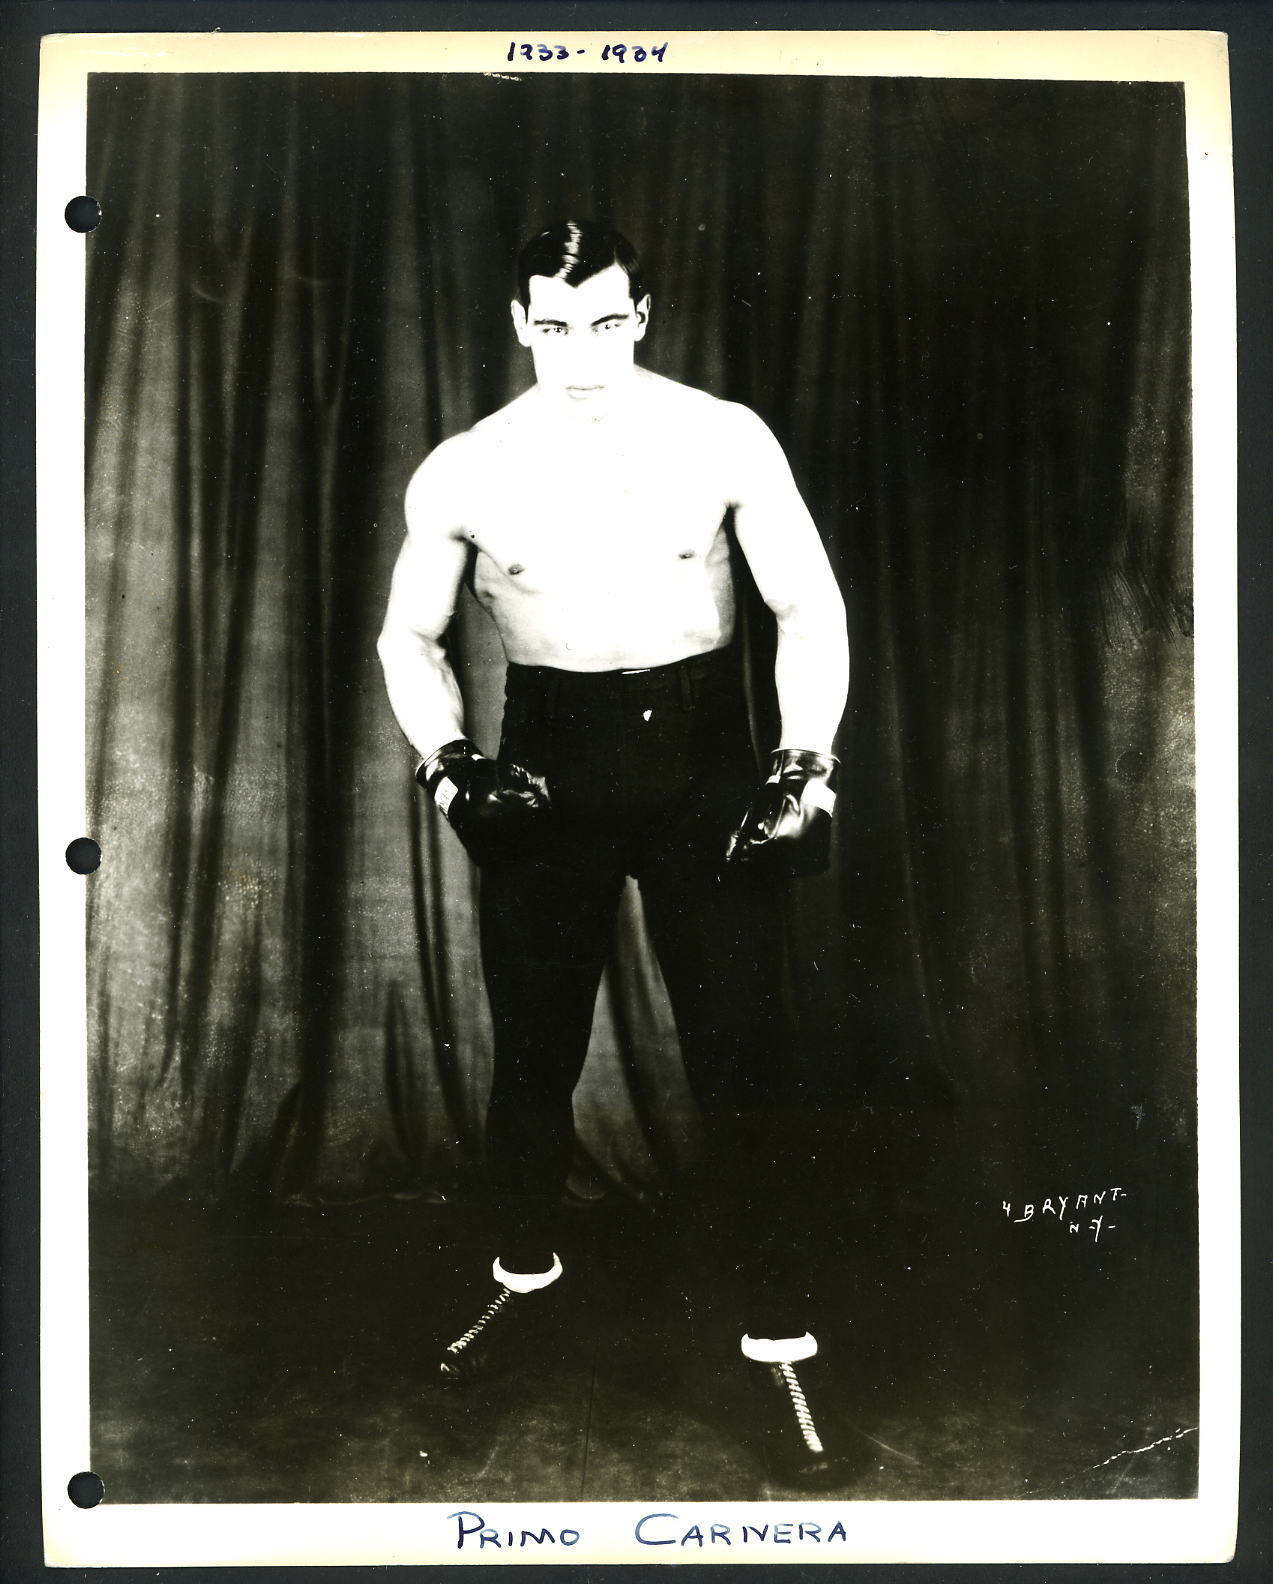 Primo Carnera 1930's image Press Photo Poster painting Boxing Italian Heavyweight Champion